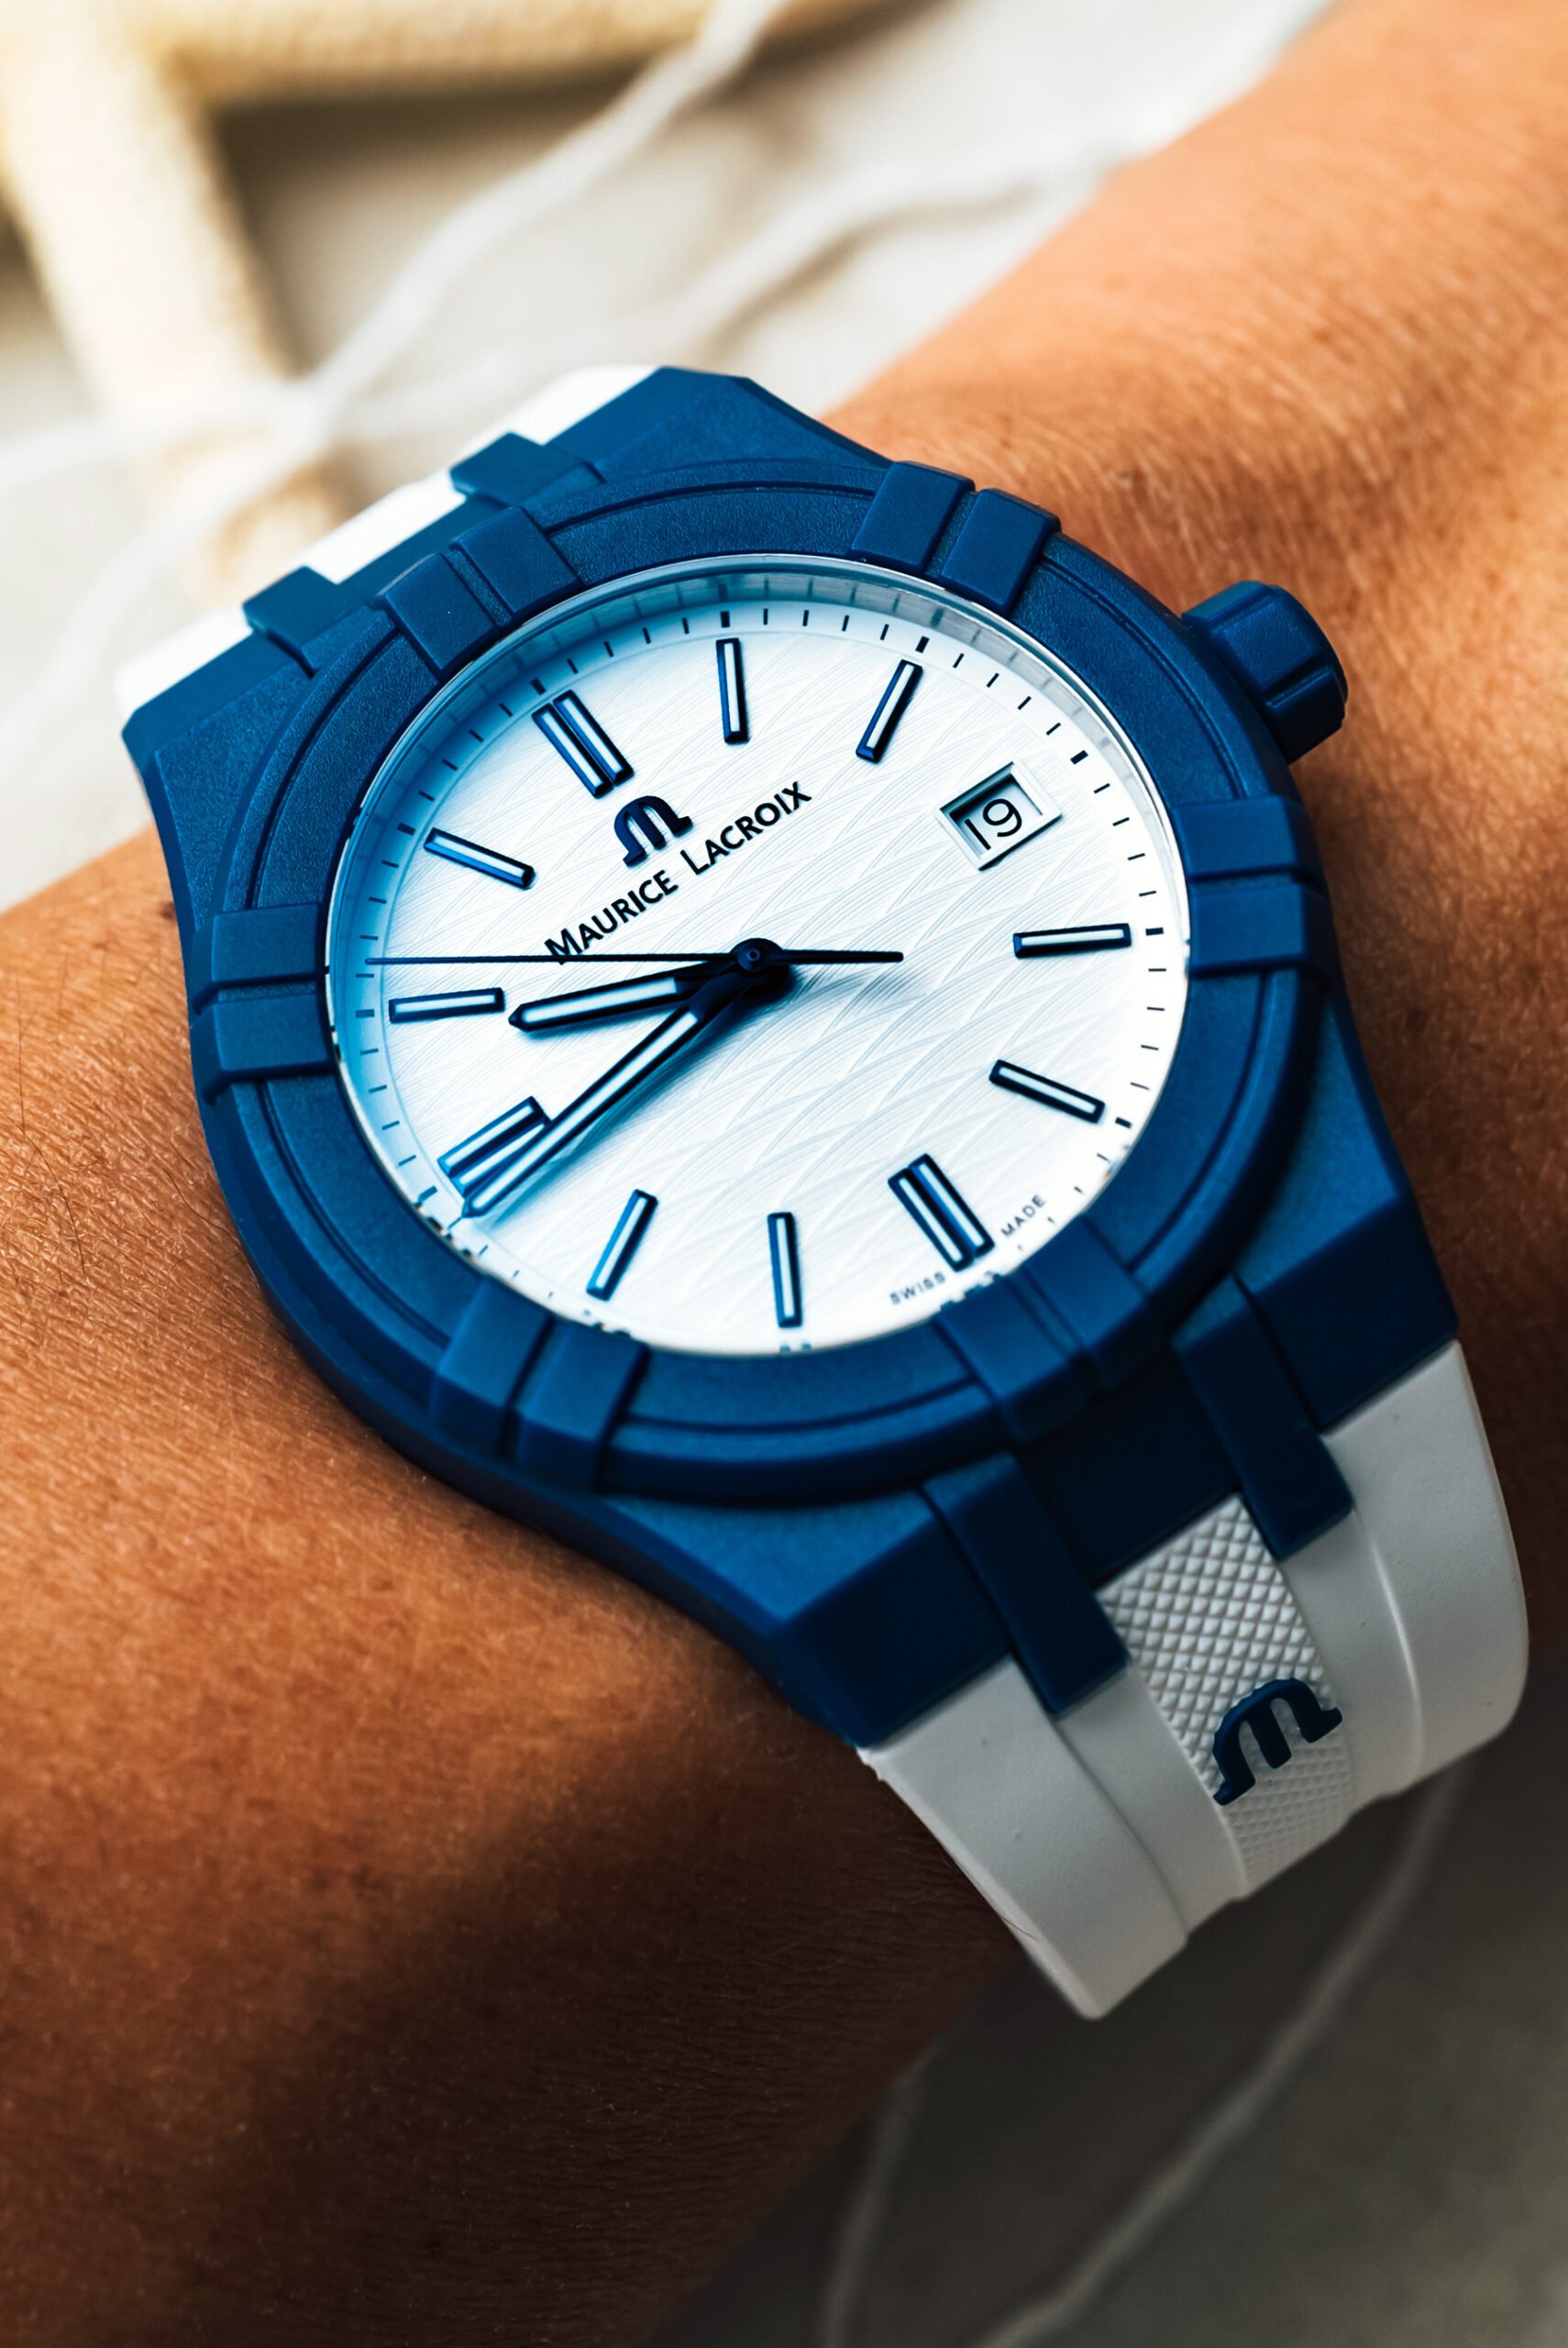 Красочные эко часы от Maurice Lacroix Aikon #tide Watch Collection